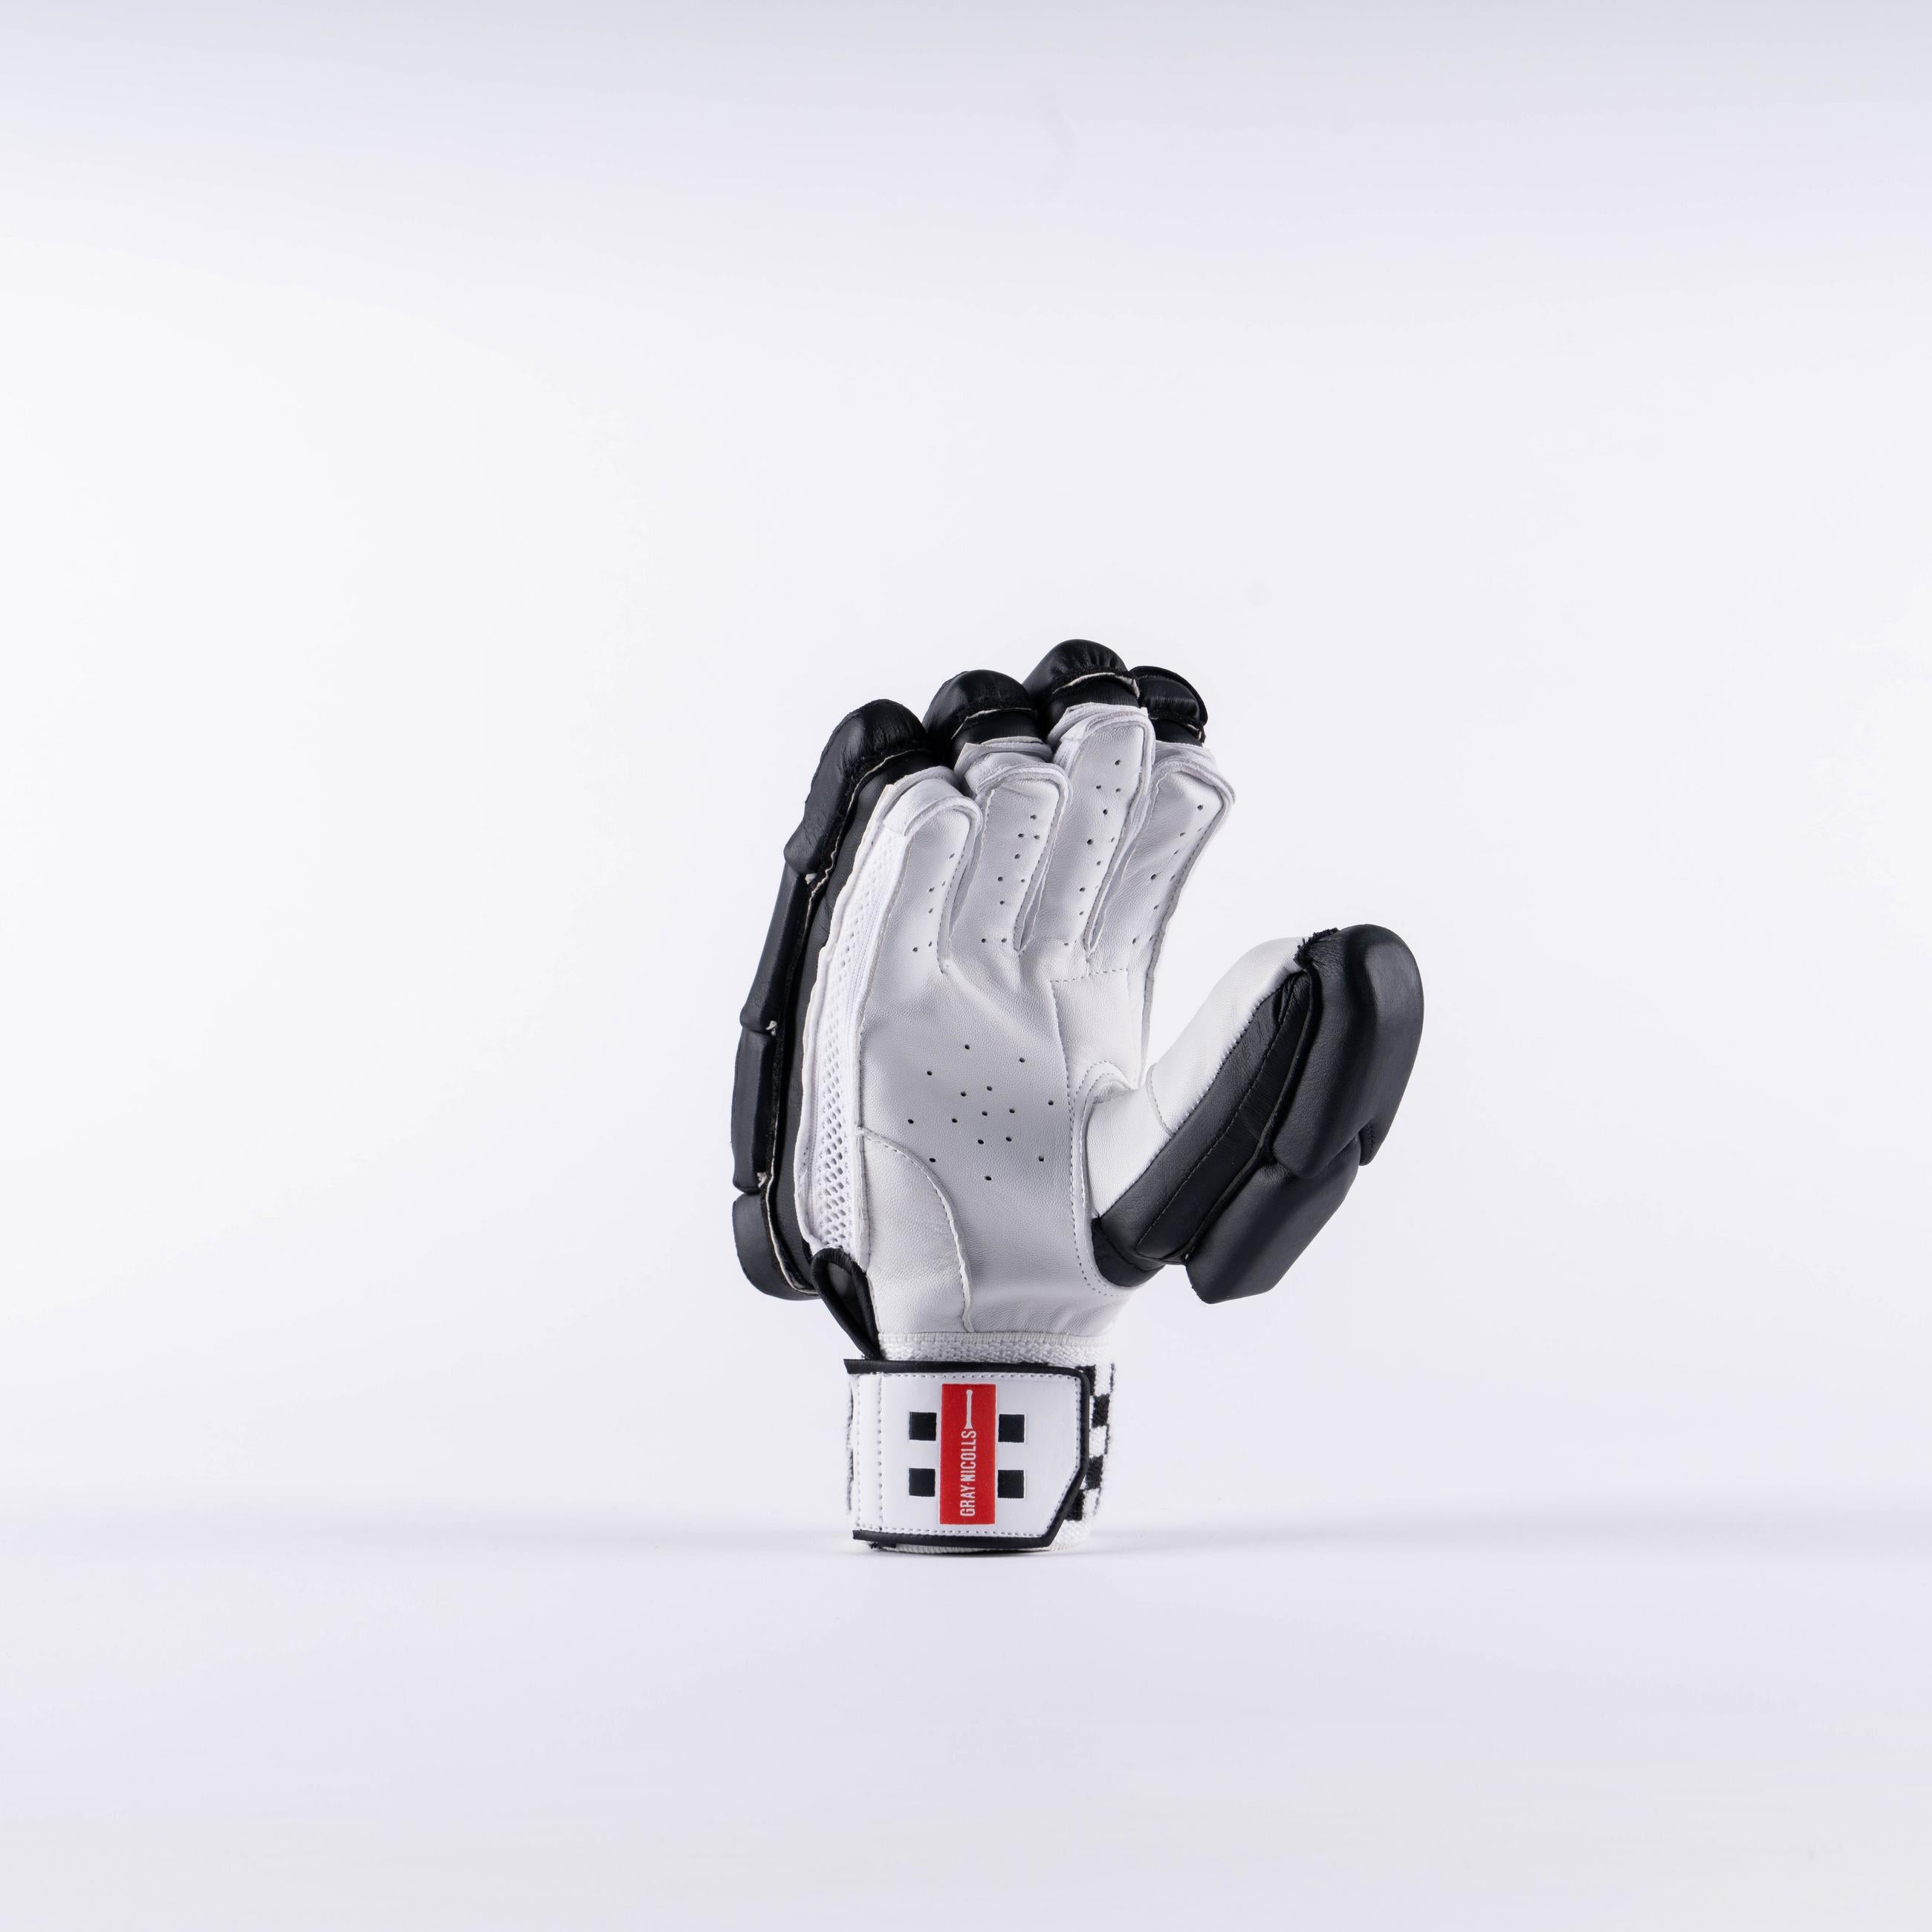 Black/White Pro Performance Batting Glove